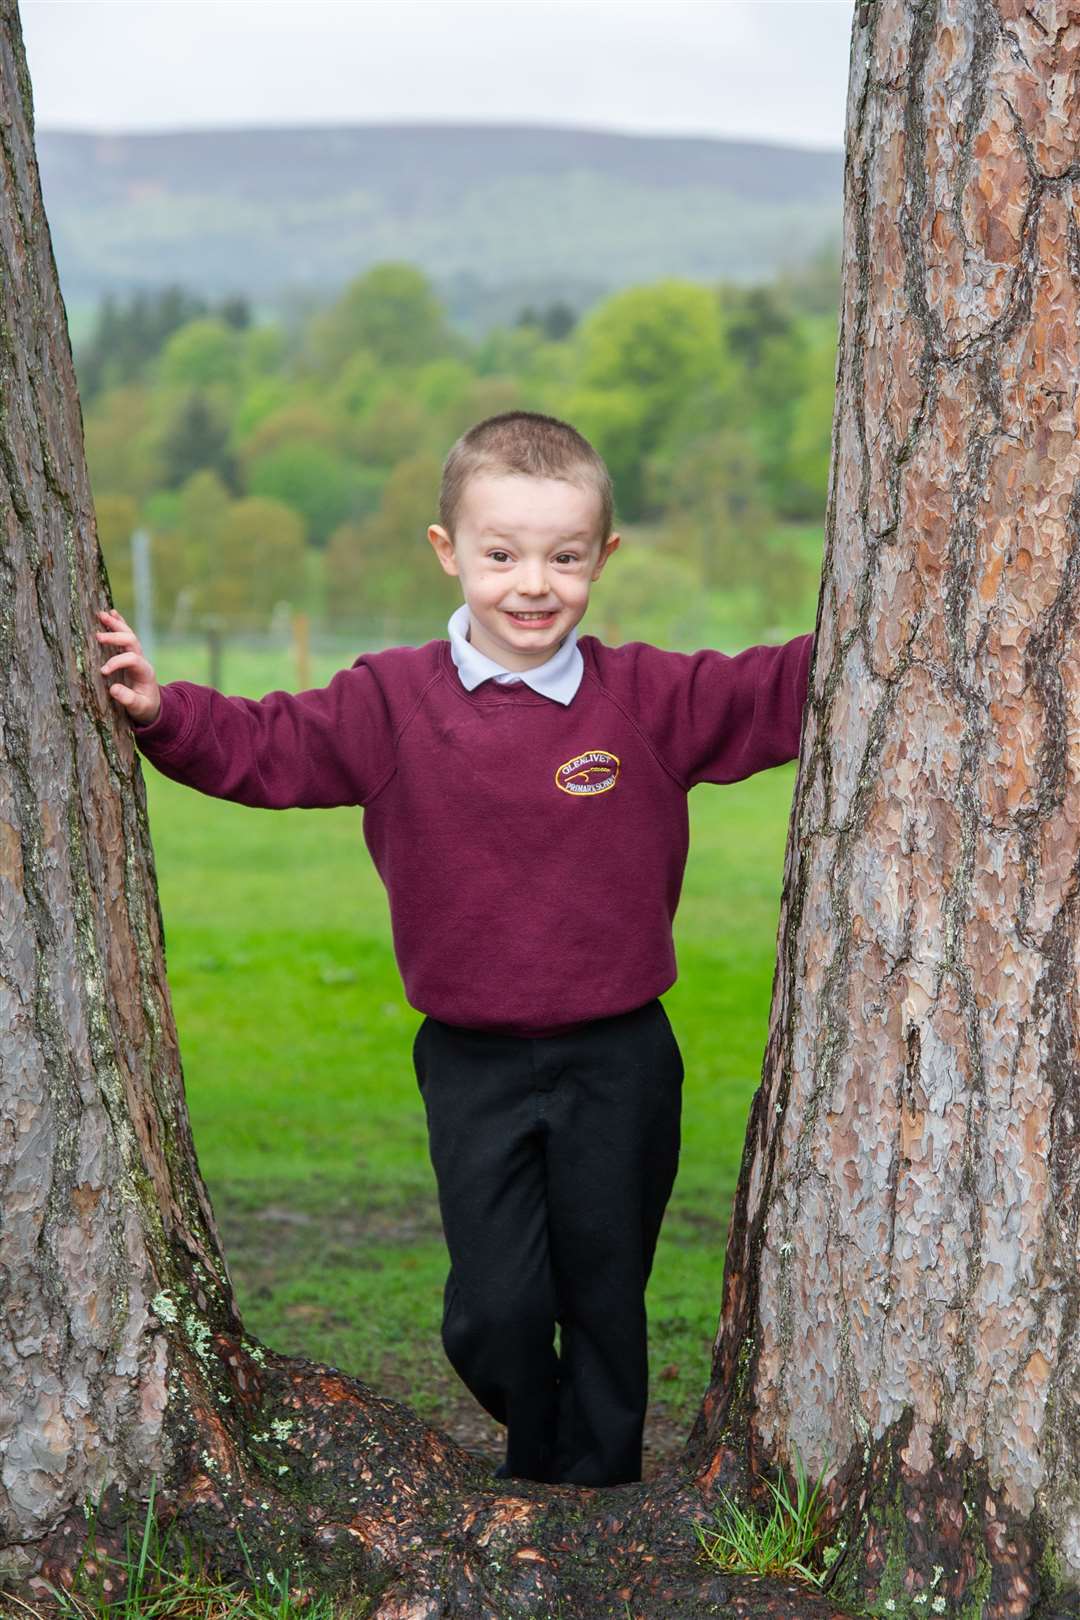 Jacob Marsden was the new P1 at Glenlivet Primary School. Picture: Daniel Forsyth